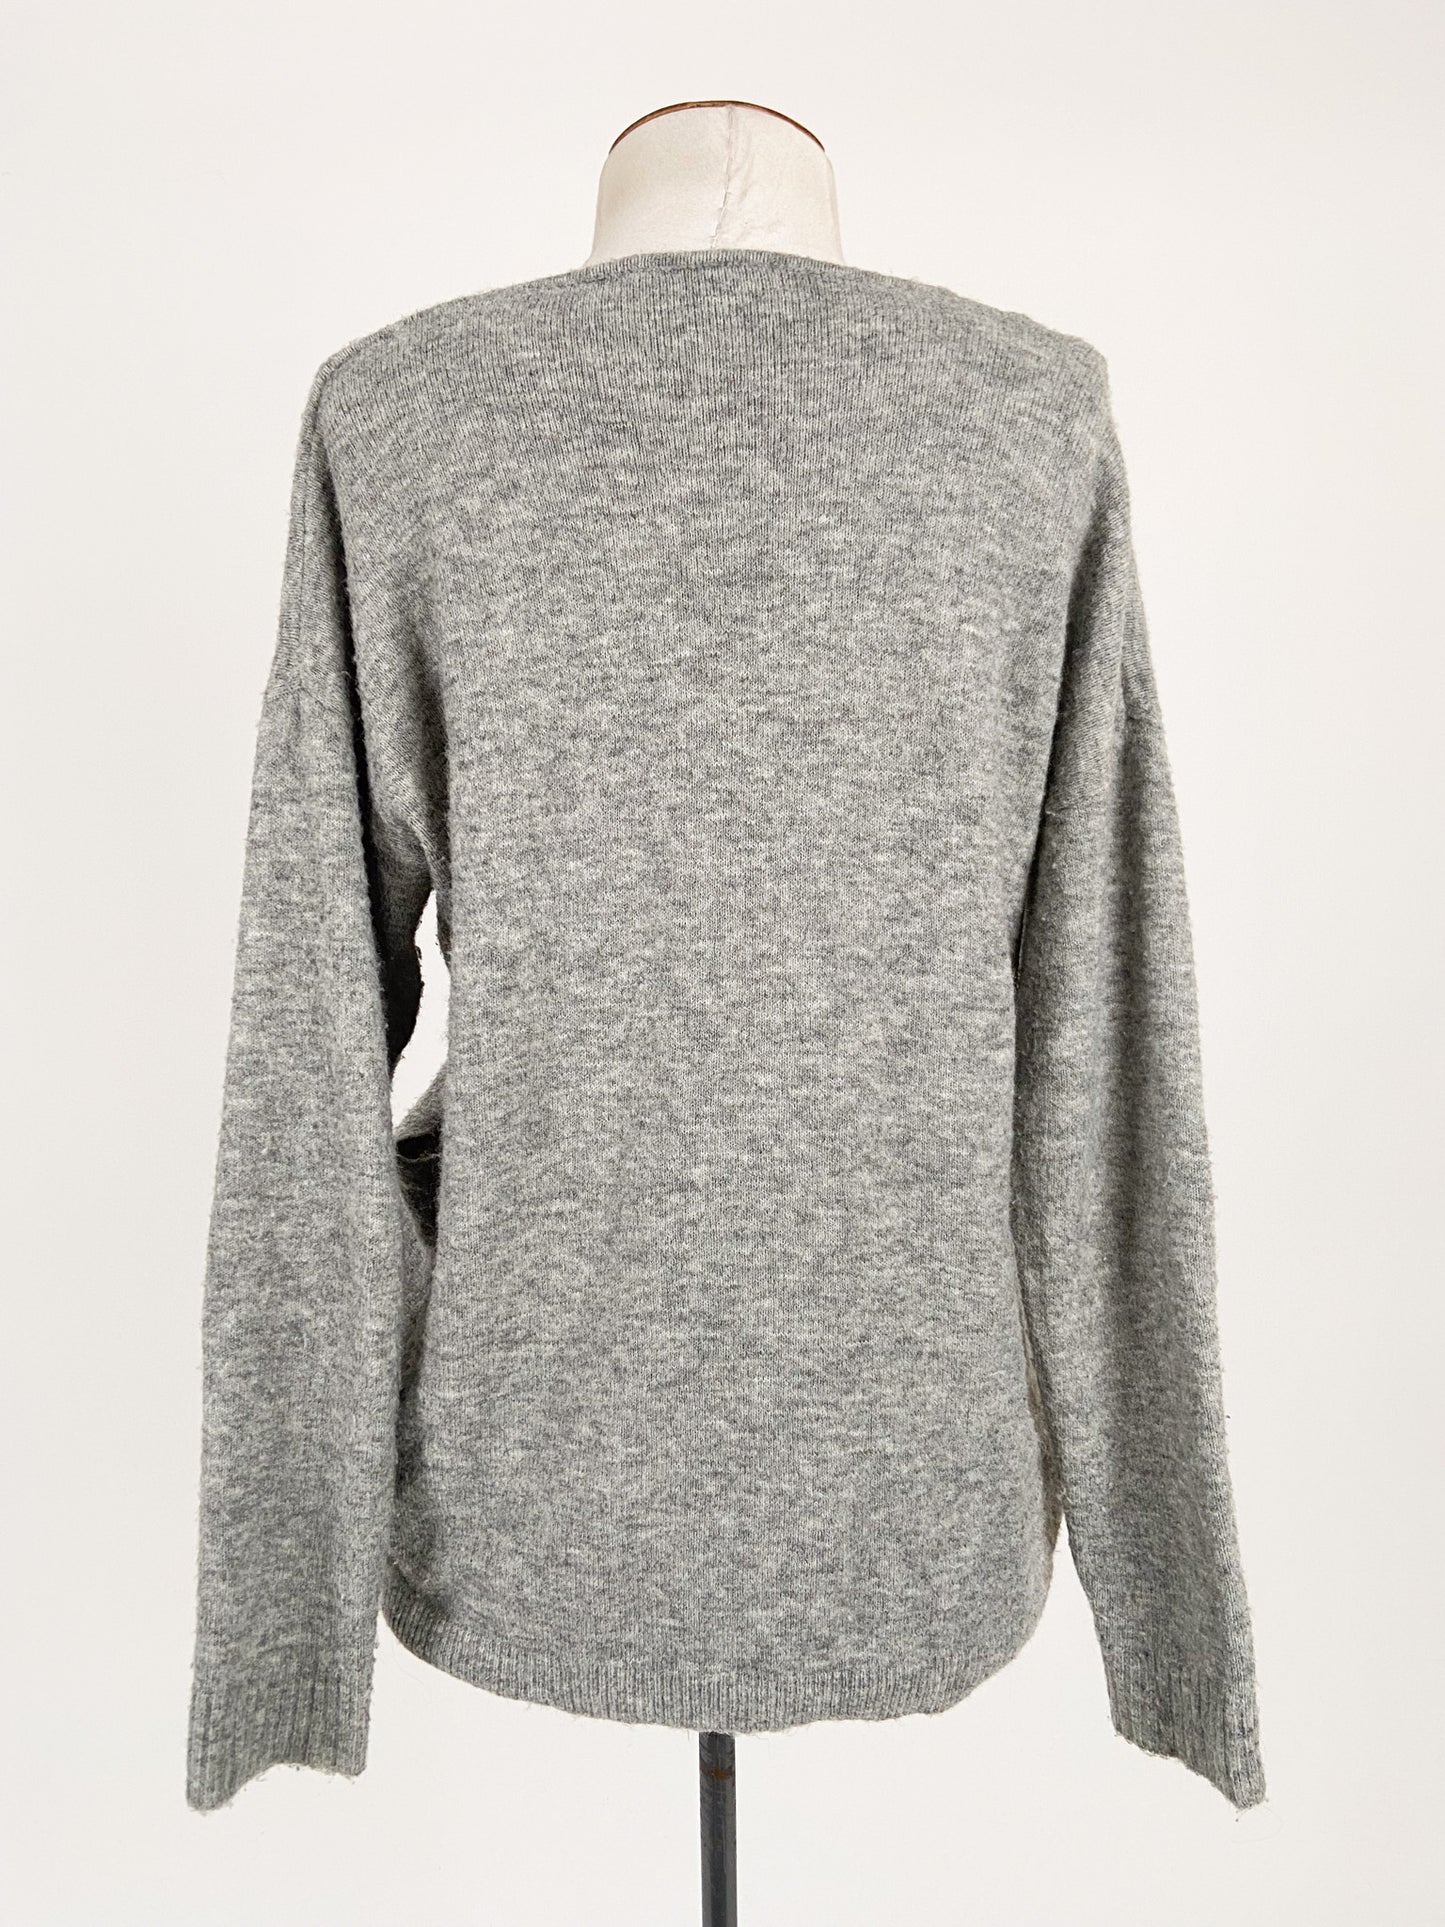 Decjuba | Grey Casual/Workwear Jumper | Size XS